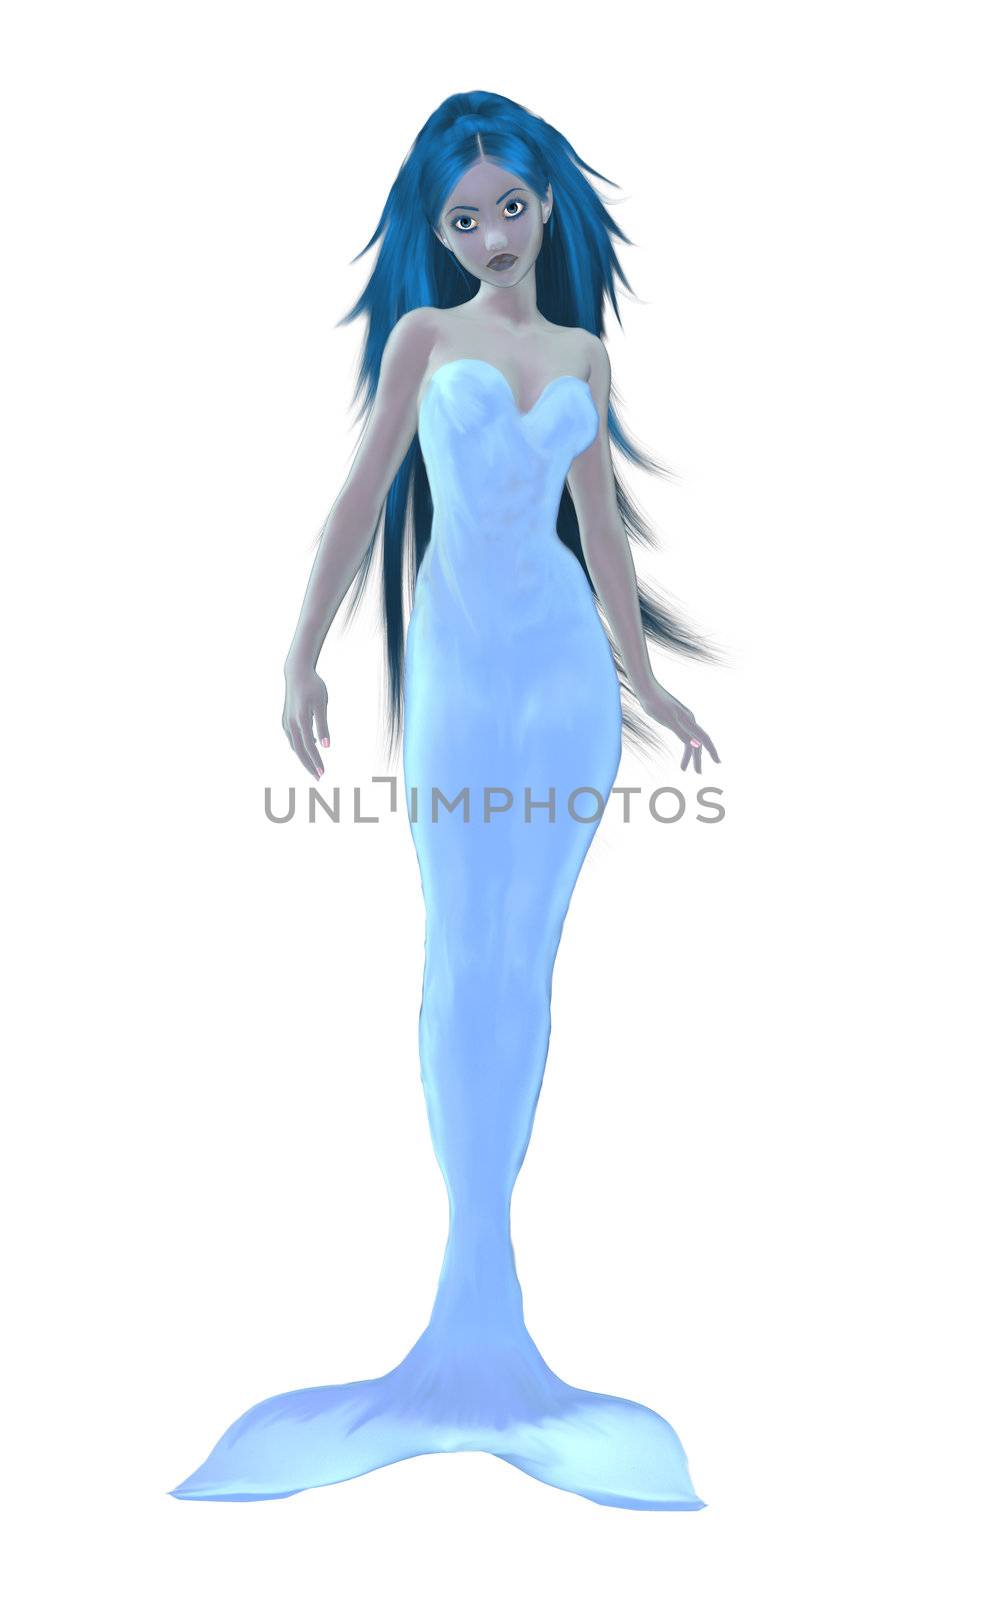 Transluscent Mermaid by kathygold